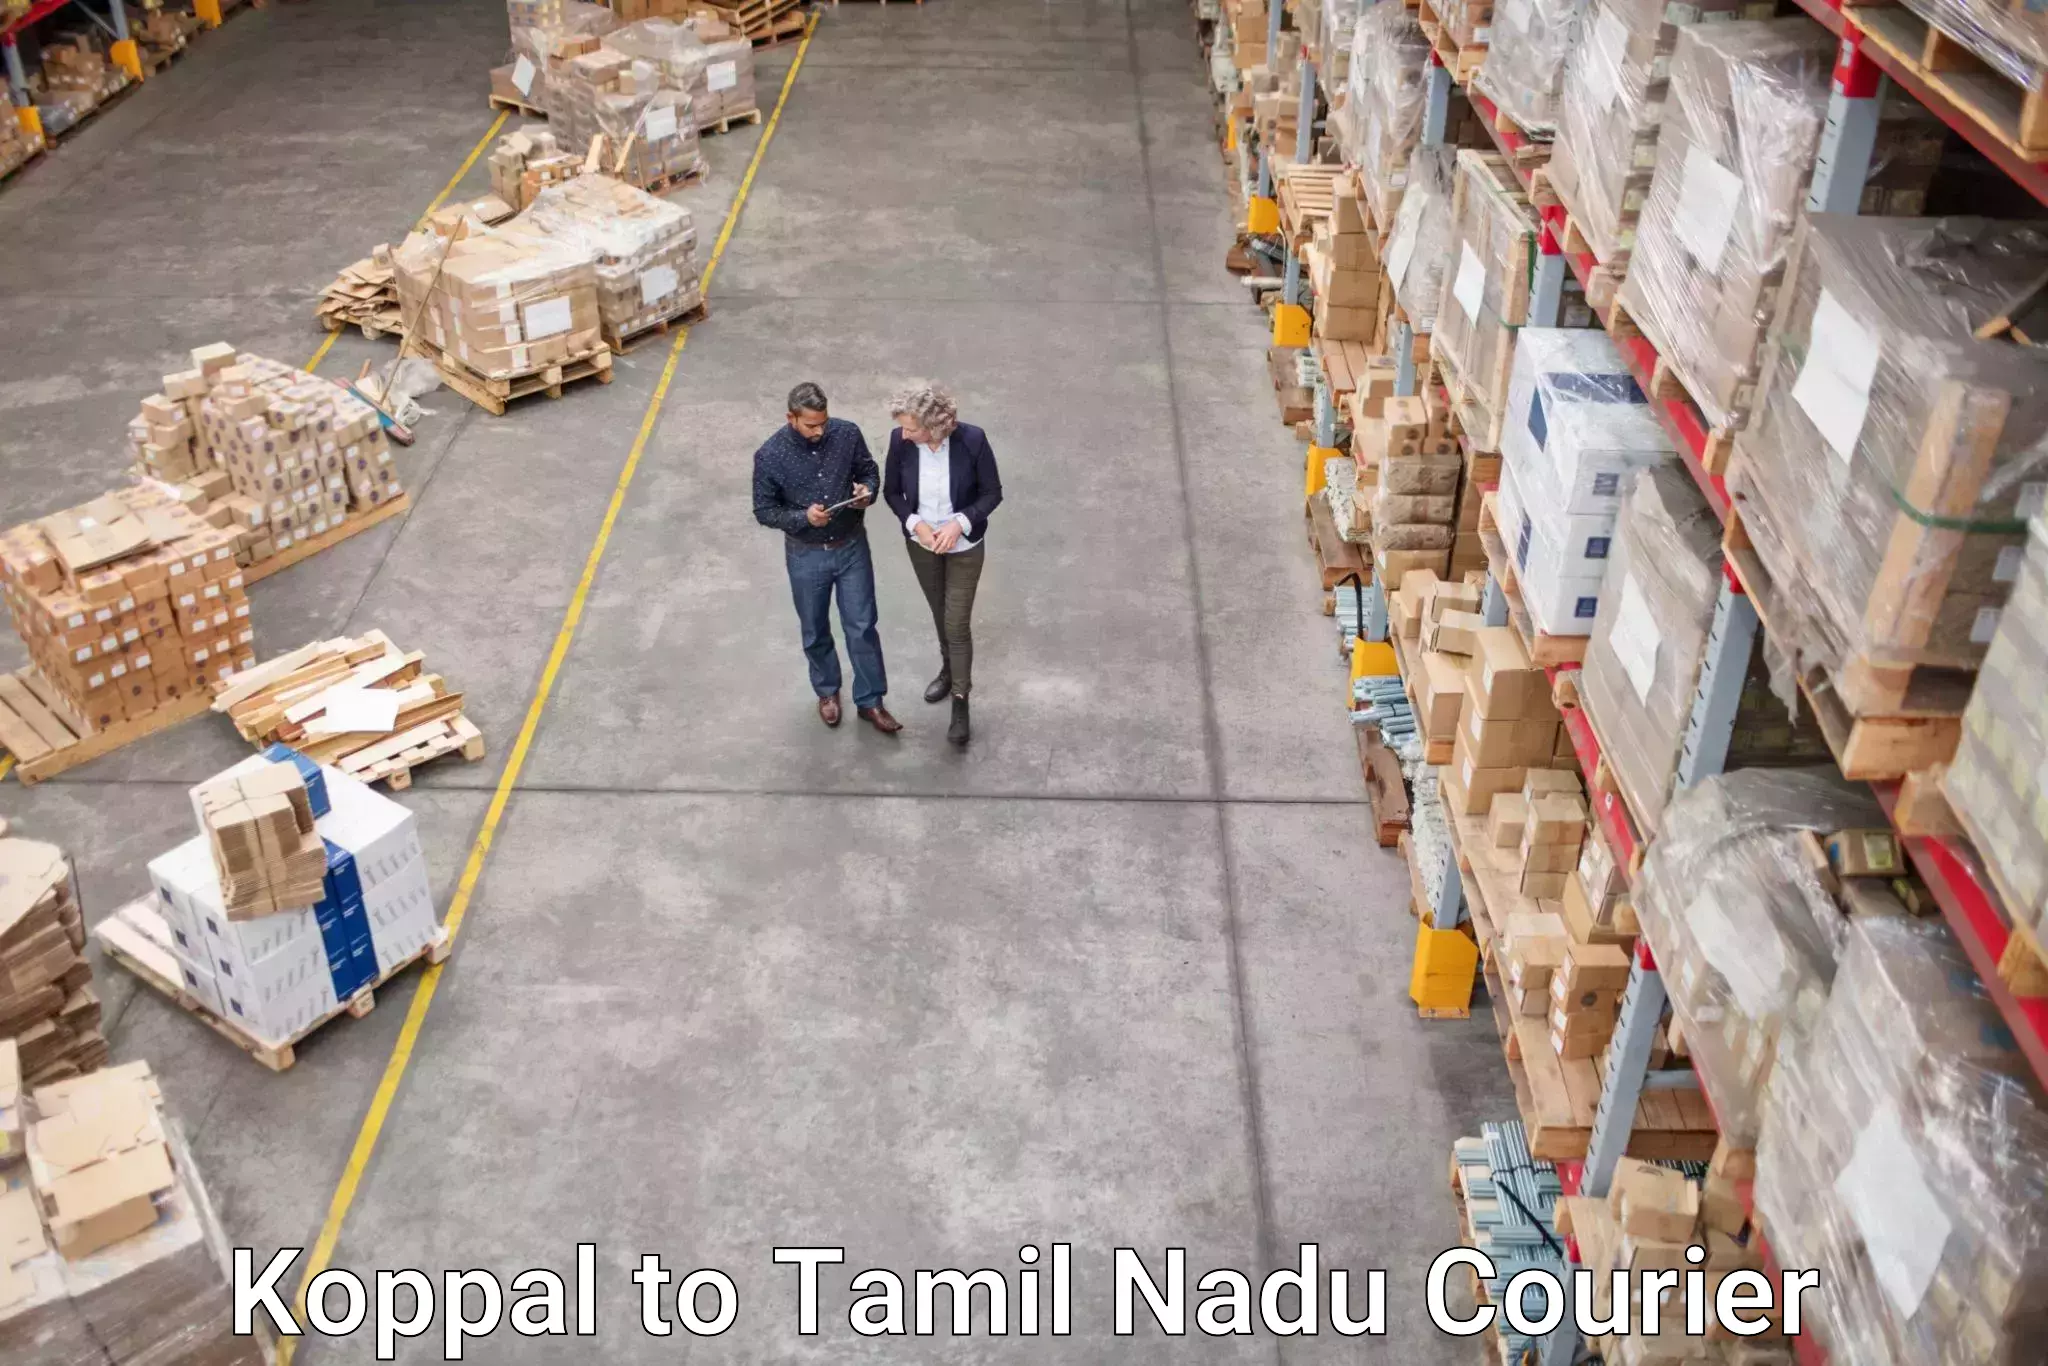 High-speed parcel service Koppal to Tamil Nadu